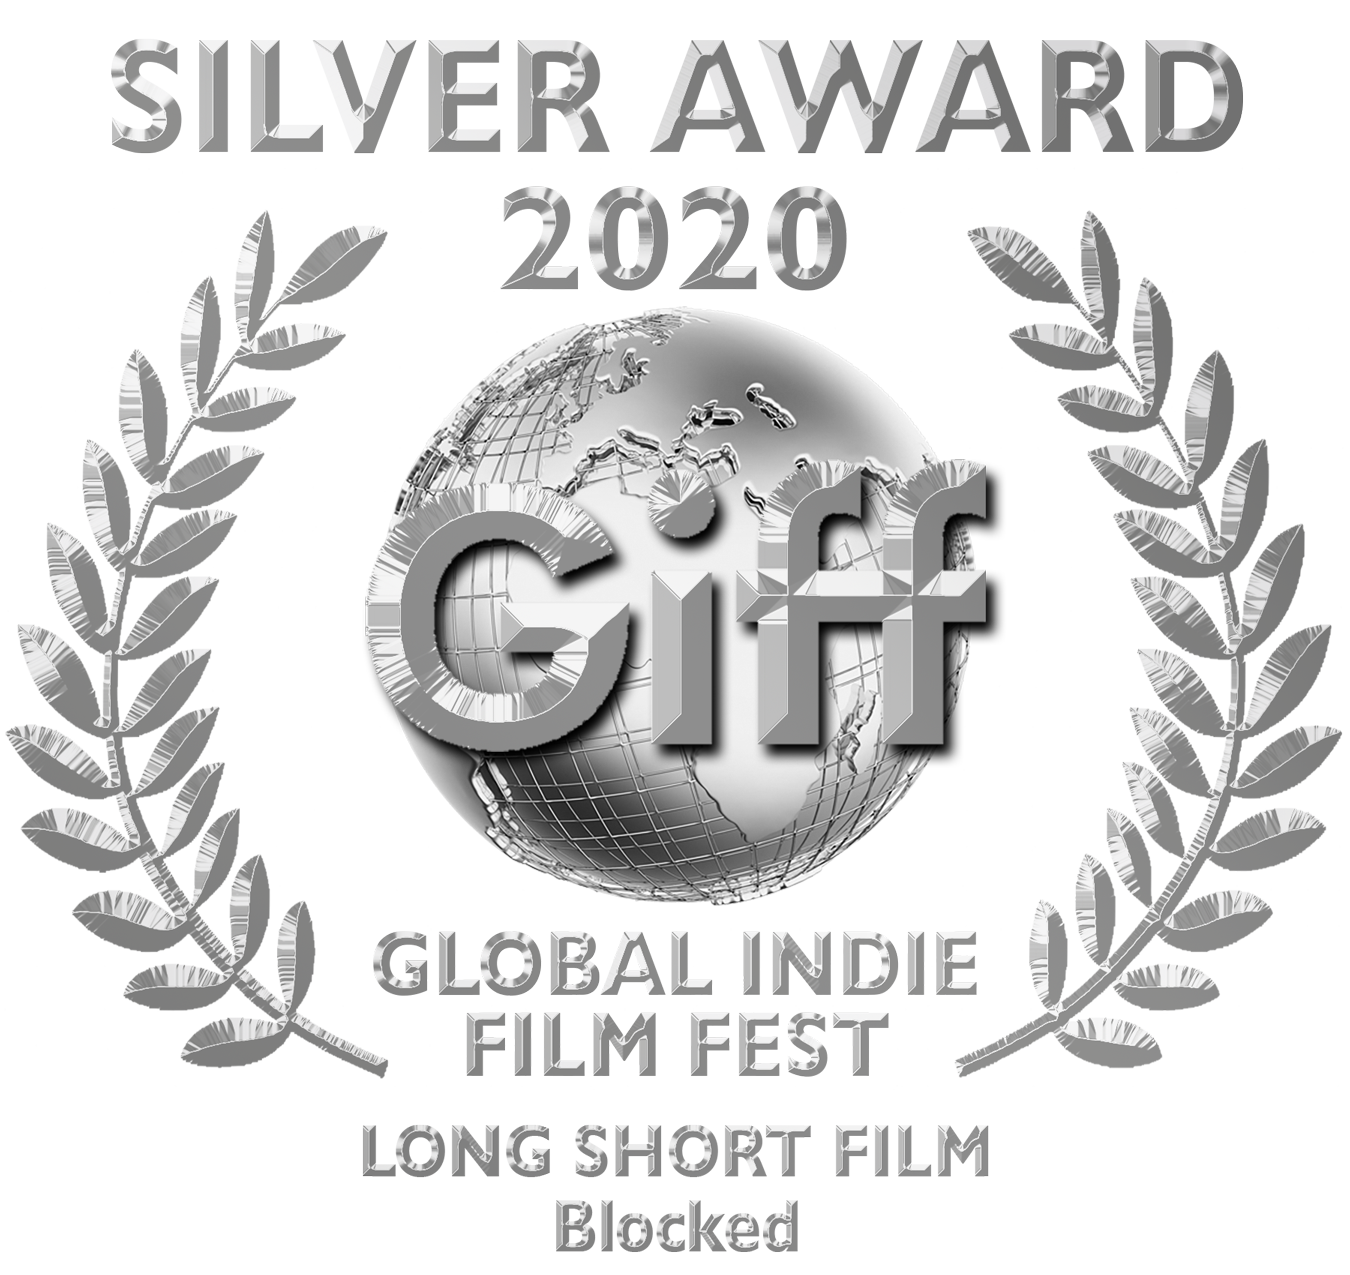 Giff Silver Award Long Short